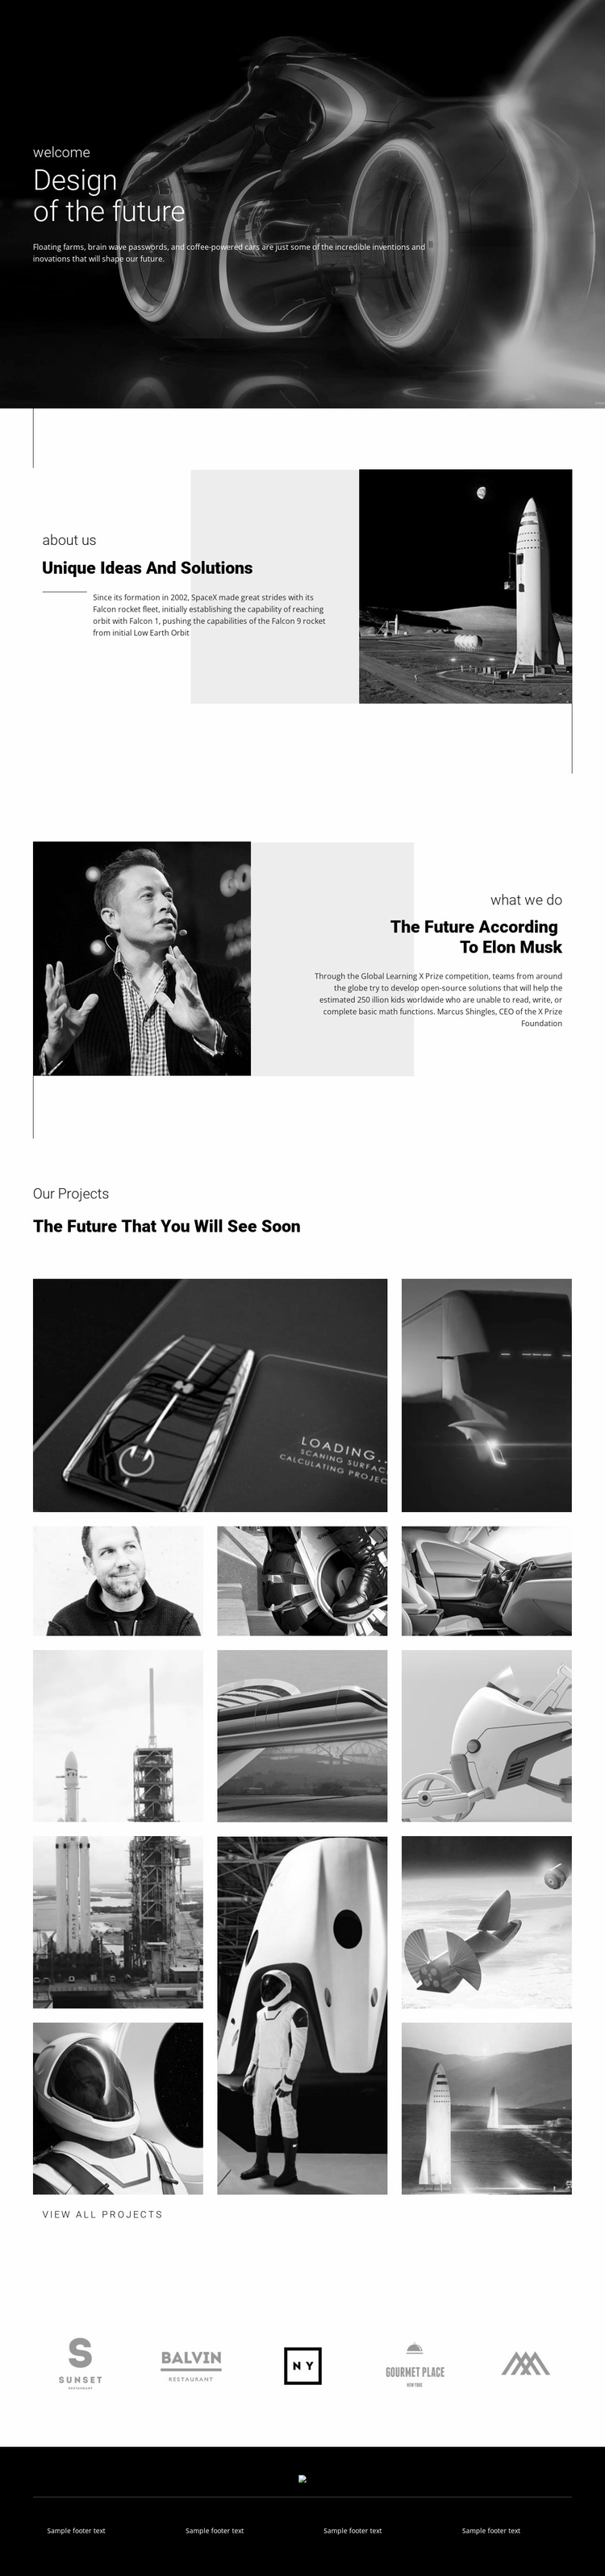 Design of future technology Website Template